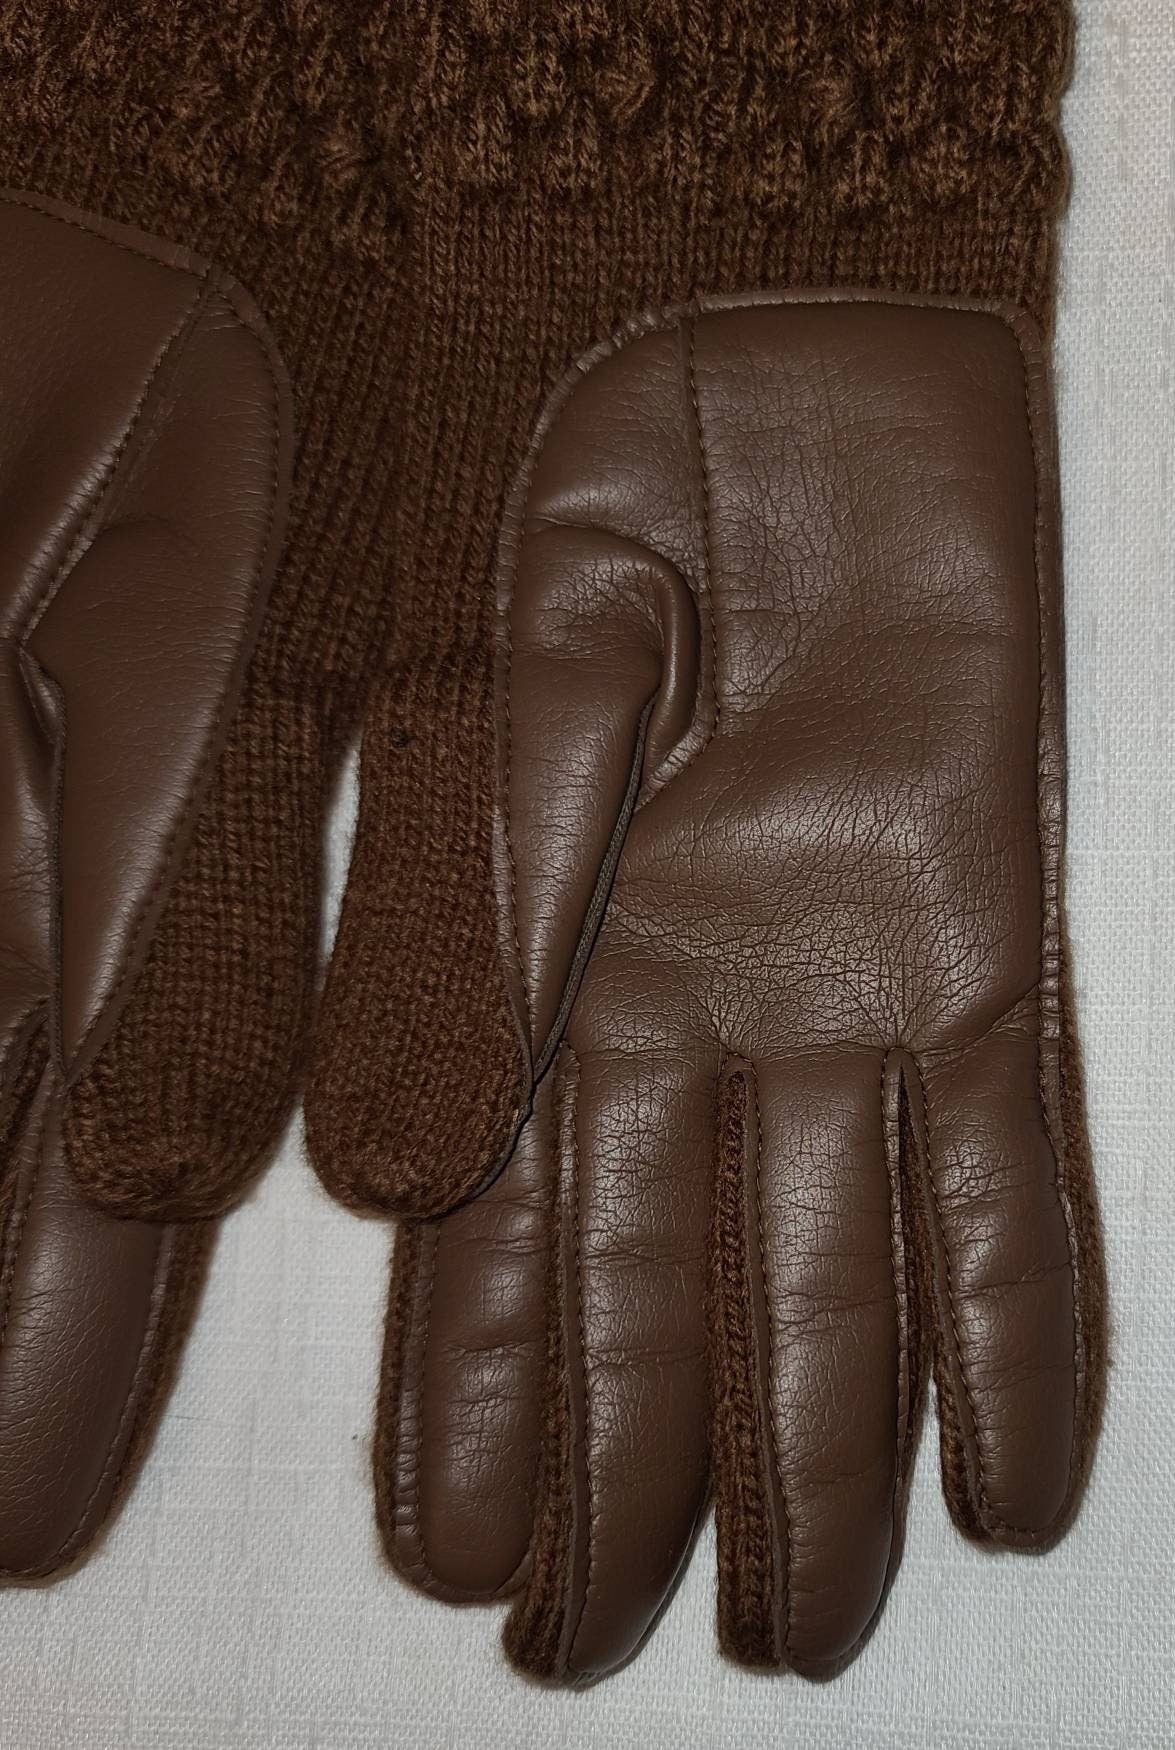 Vintage Knit Gloves 1970s Brown Acrylic Knit Gloves Vinyl Palms Mittens Boho 7 7.5